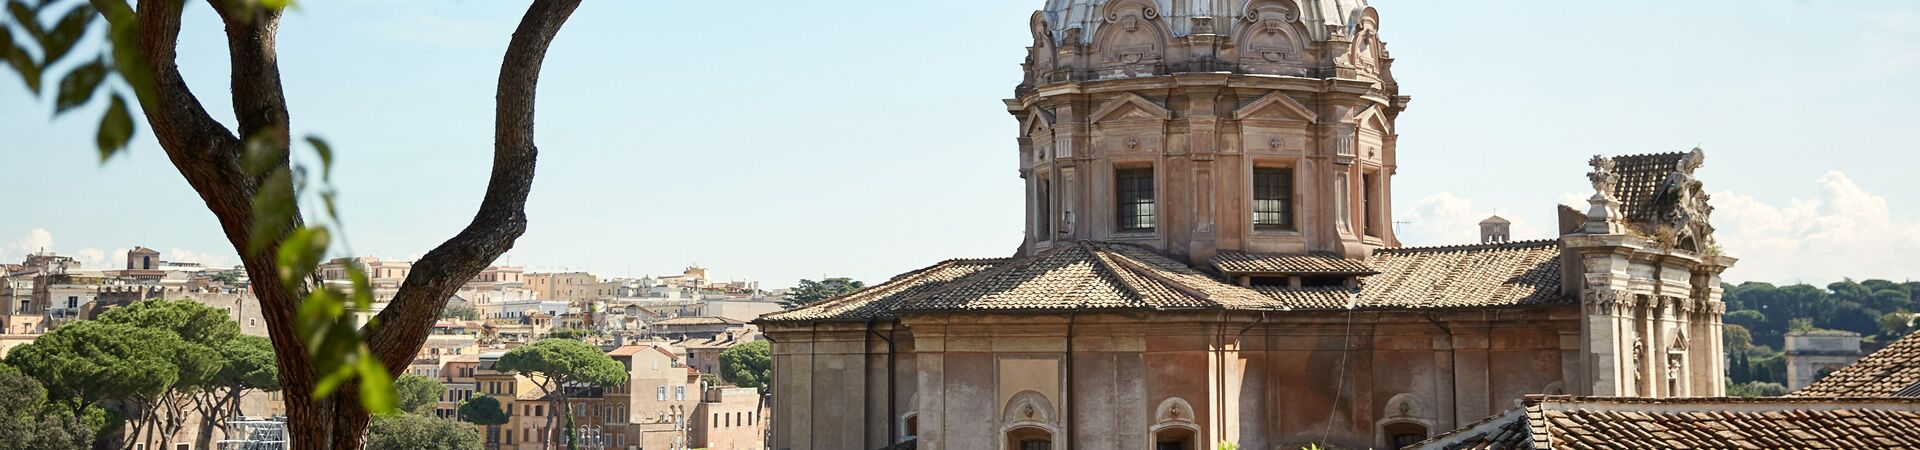 Graduate Housing | John Cabot University | Rome, Italy 